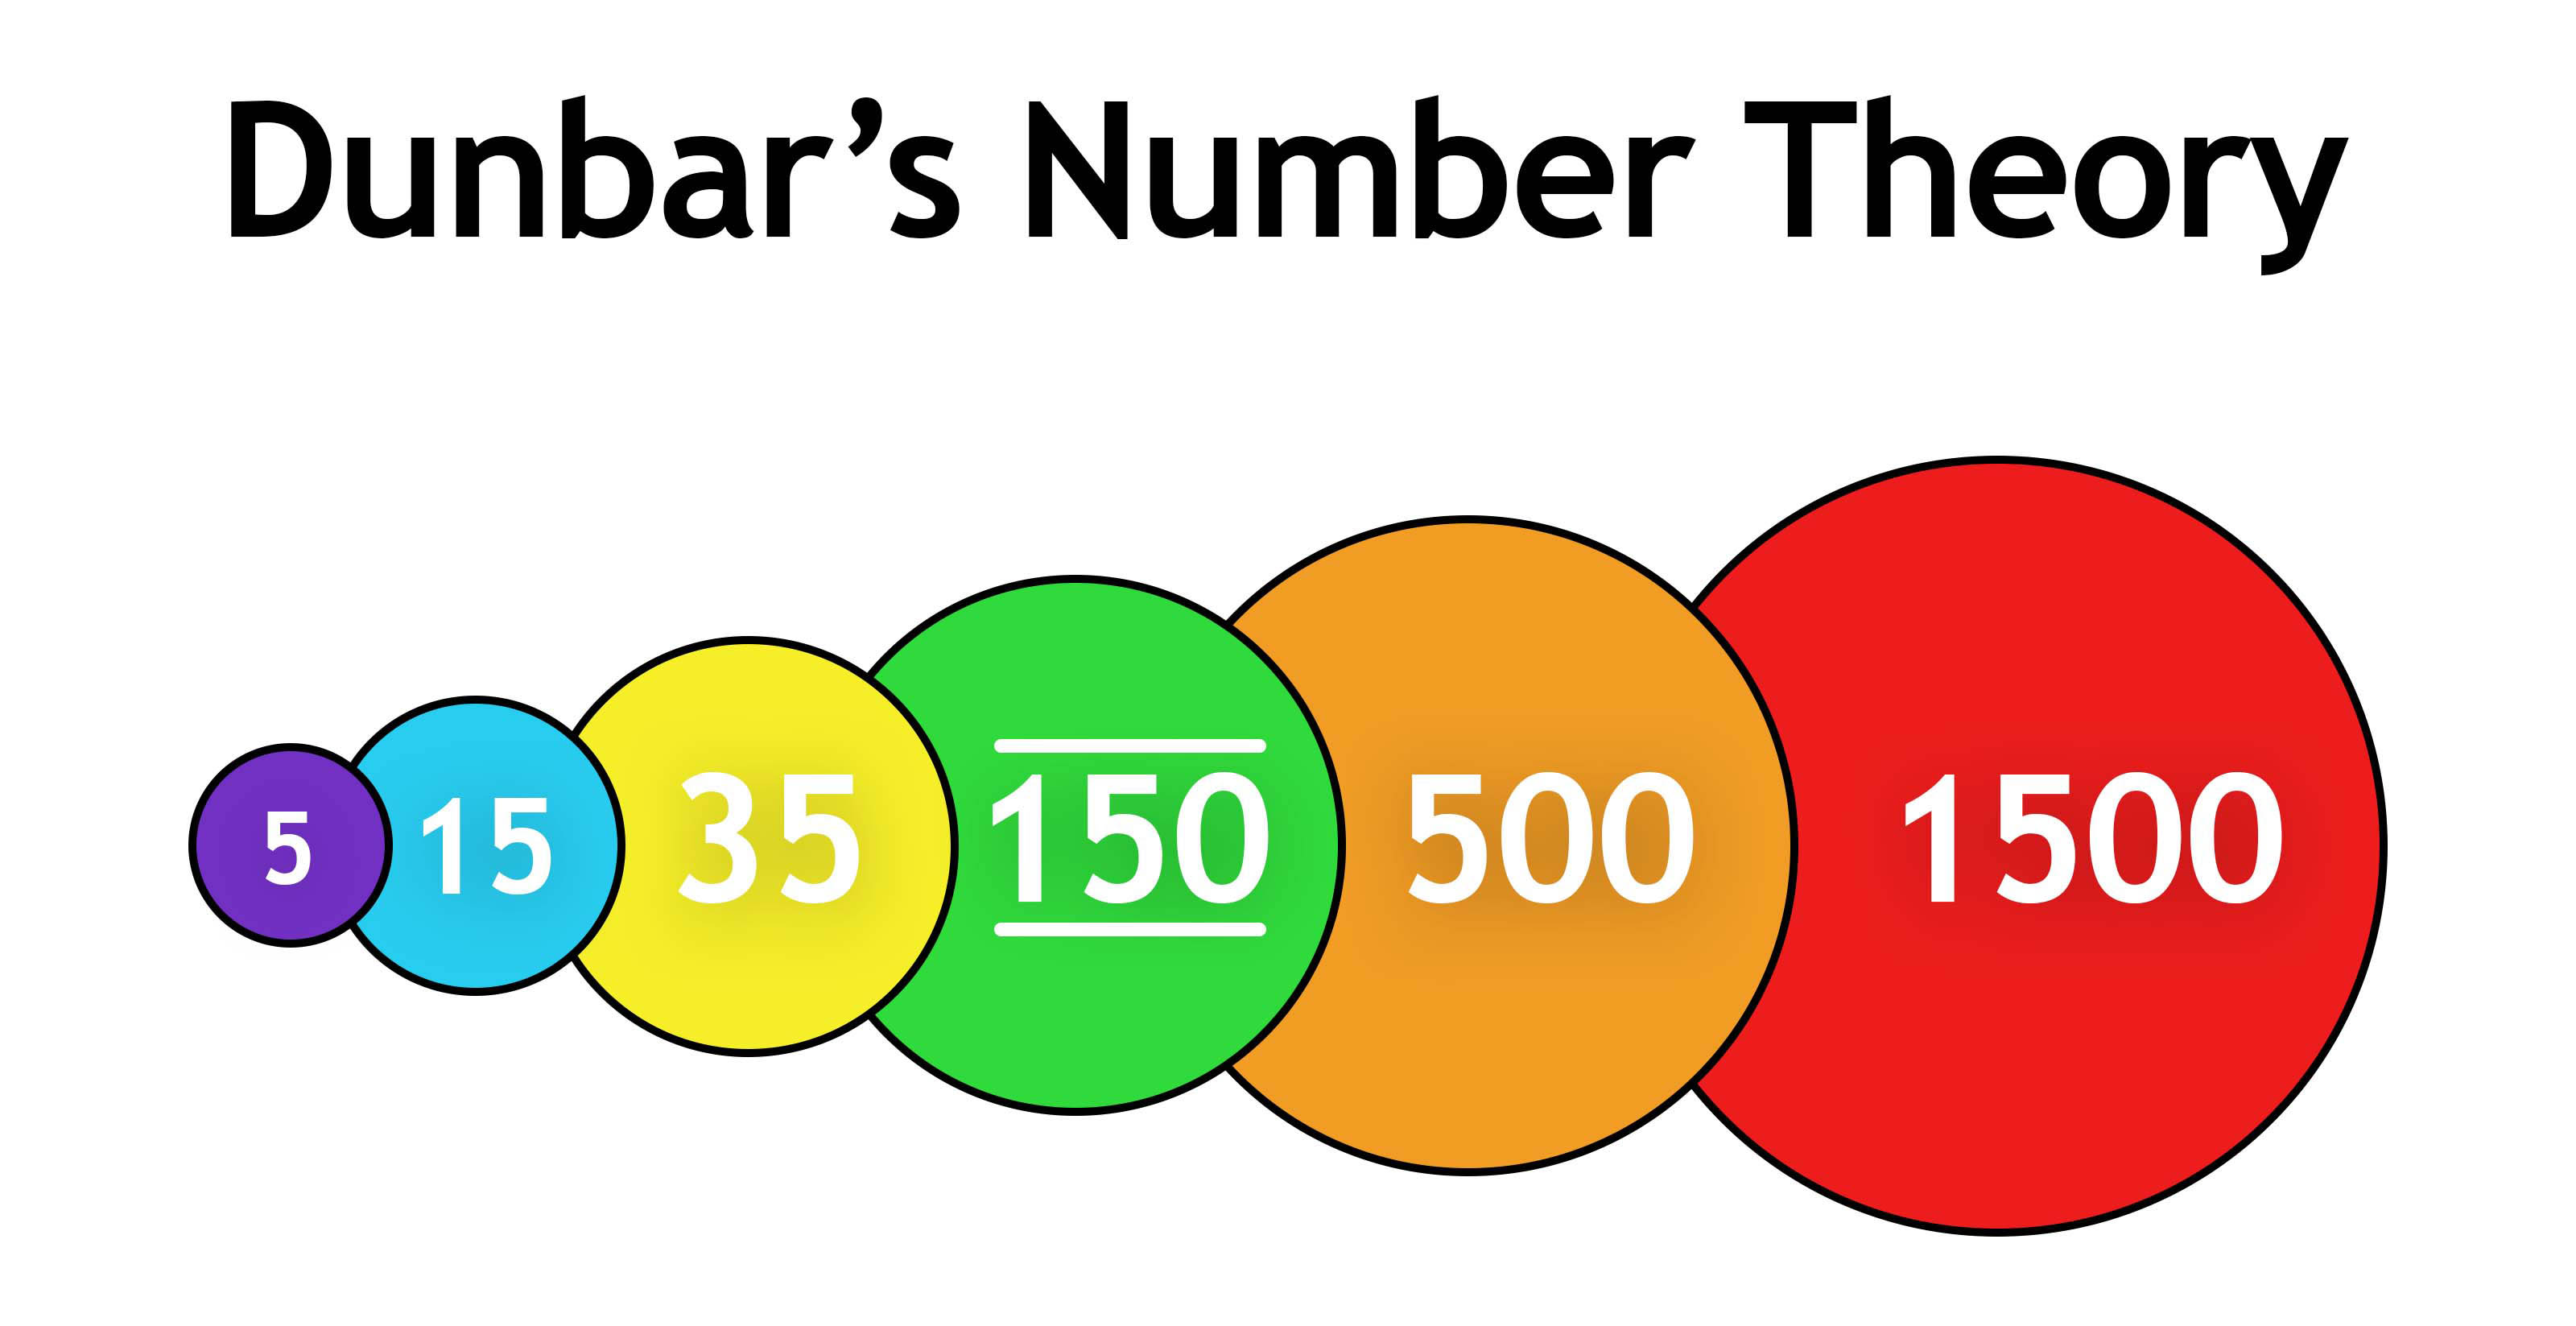 Dunbar Number Theory